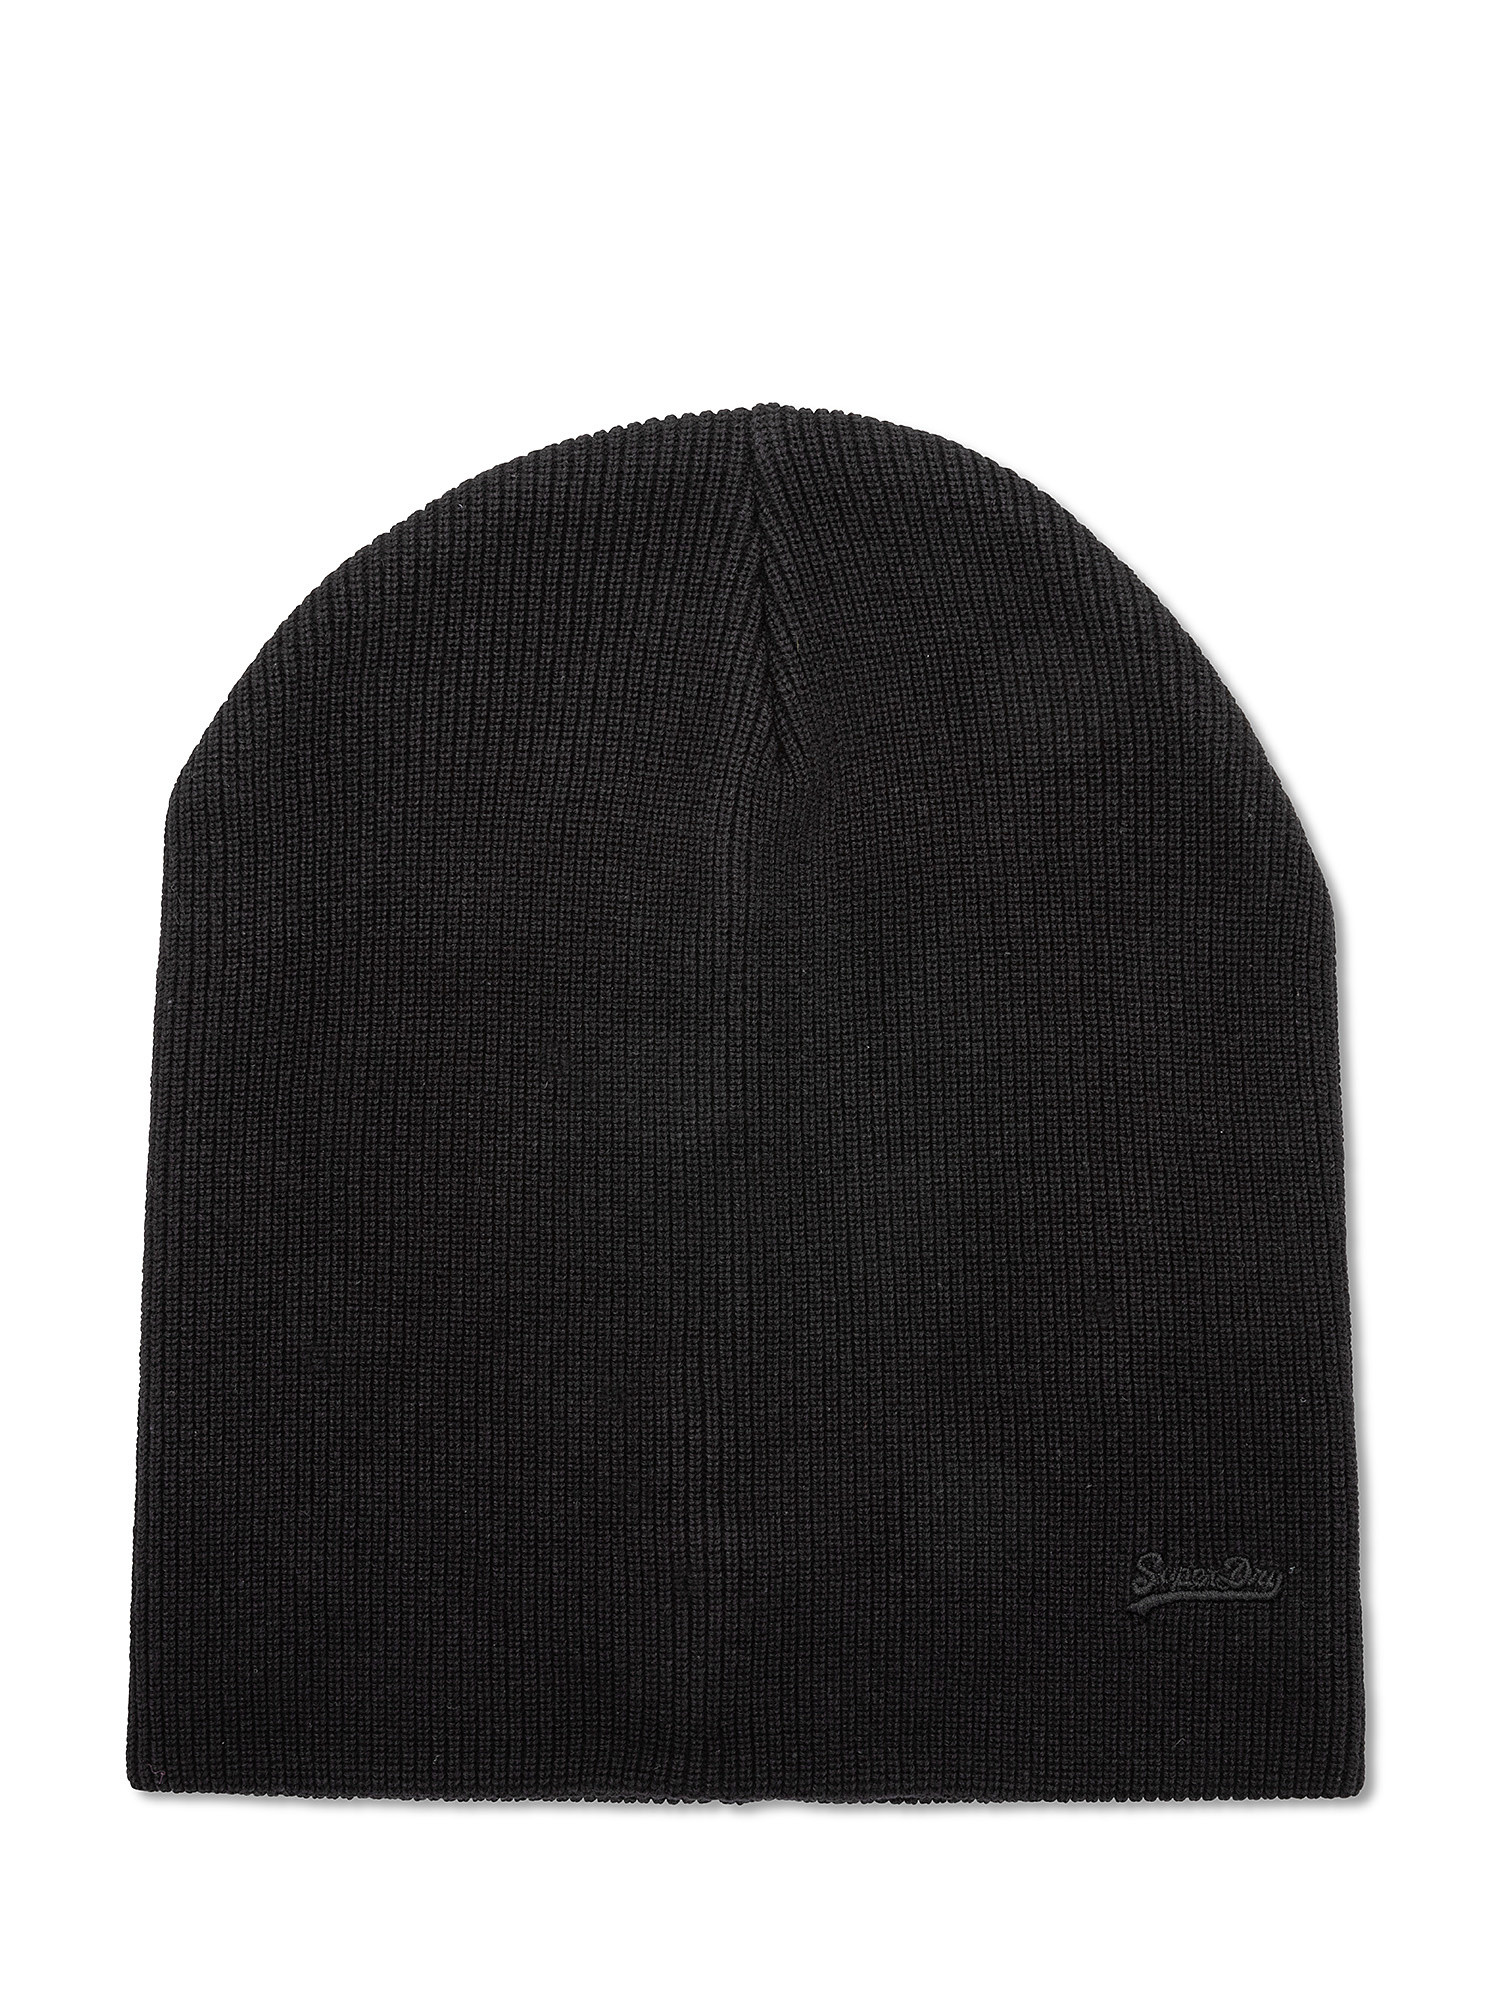 Superdry - Cotton cap, Black, large image number 0